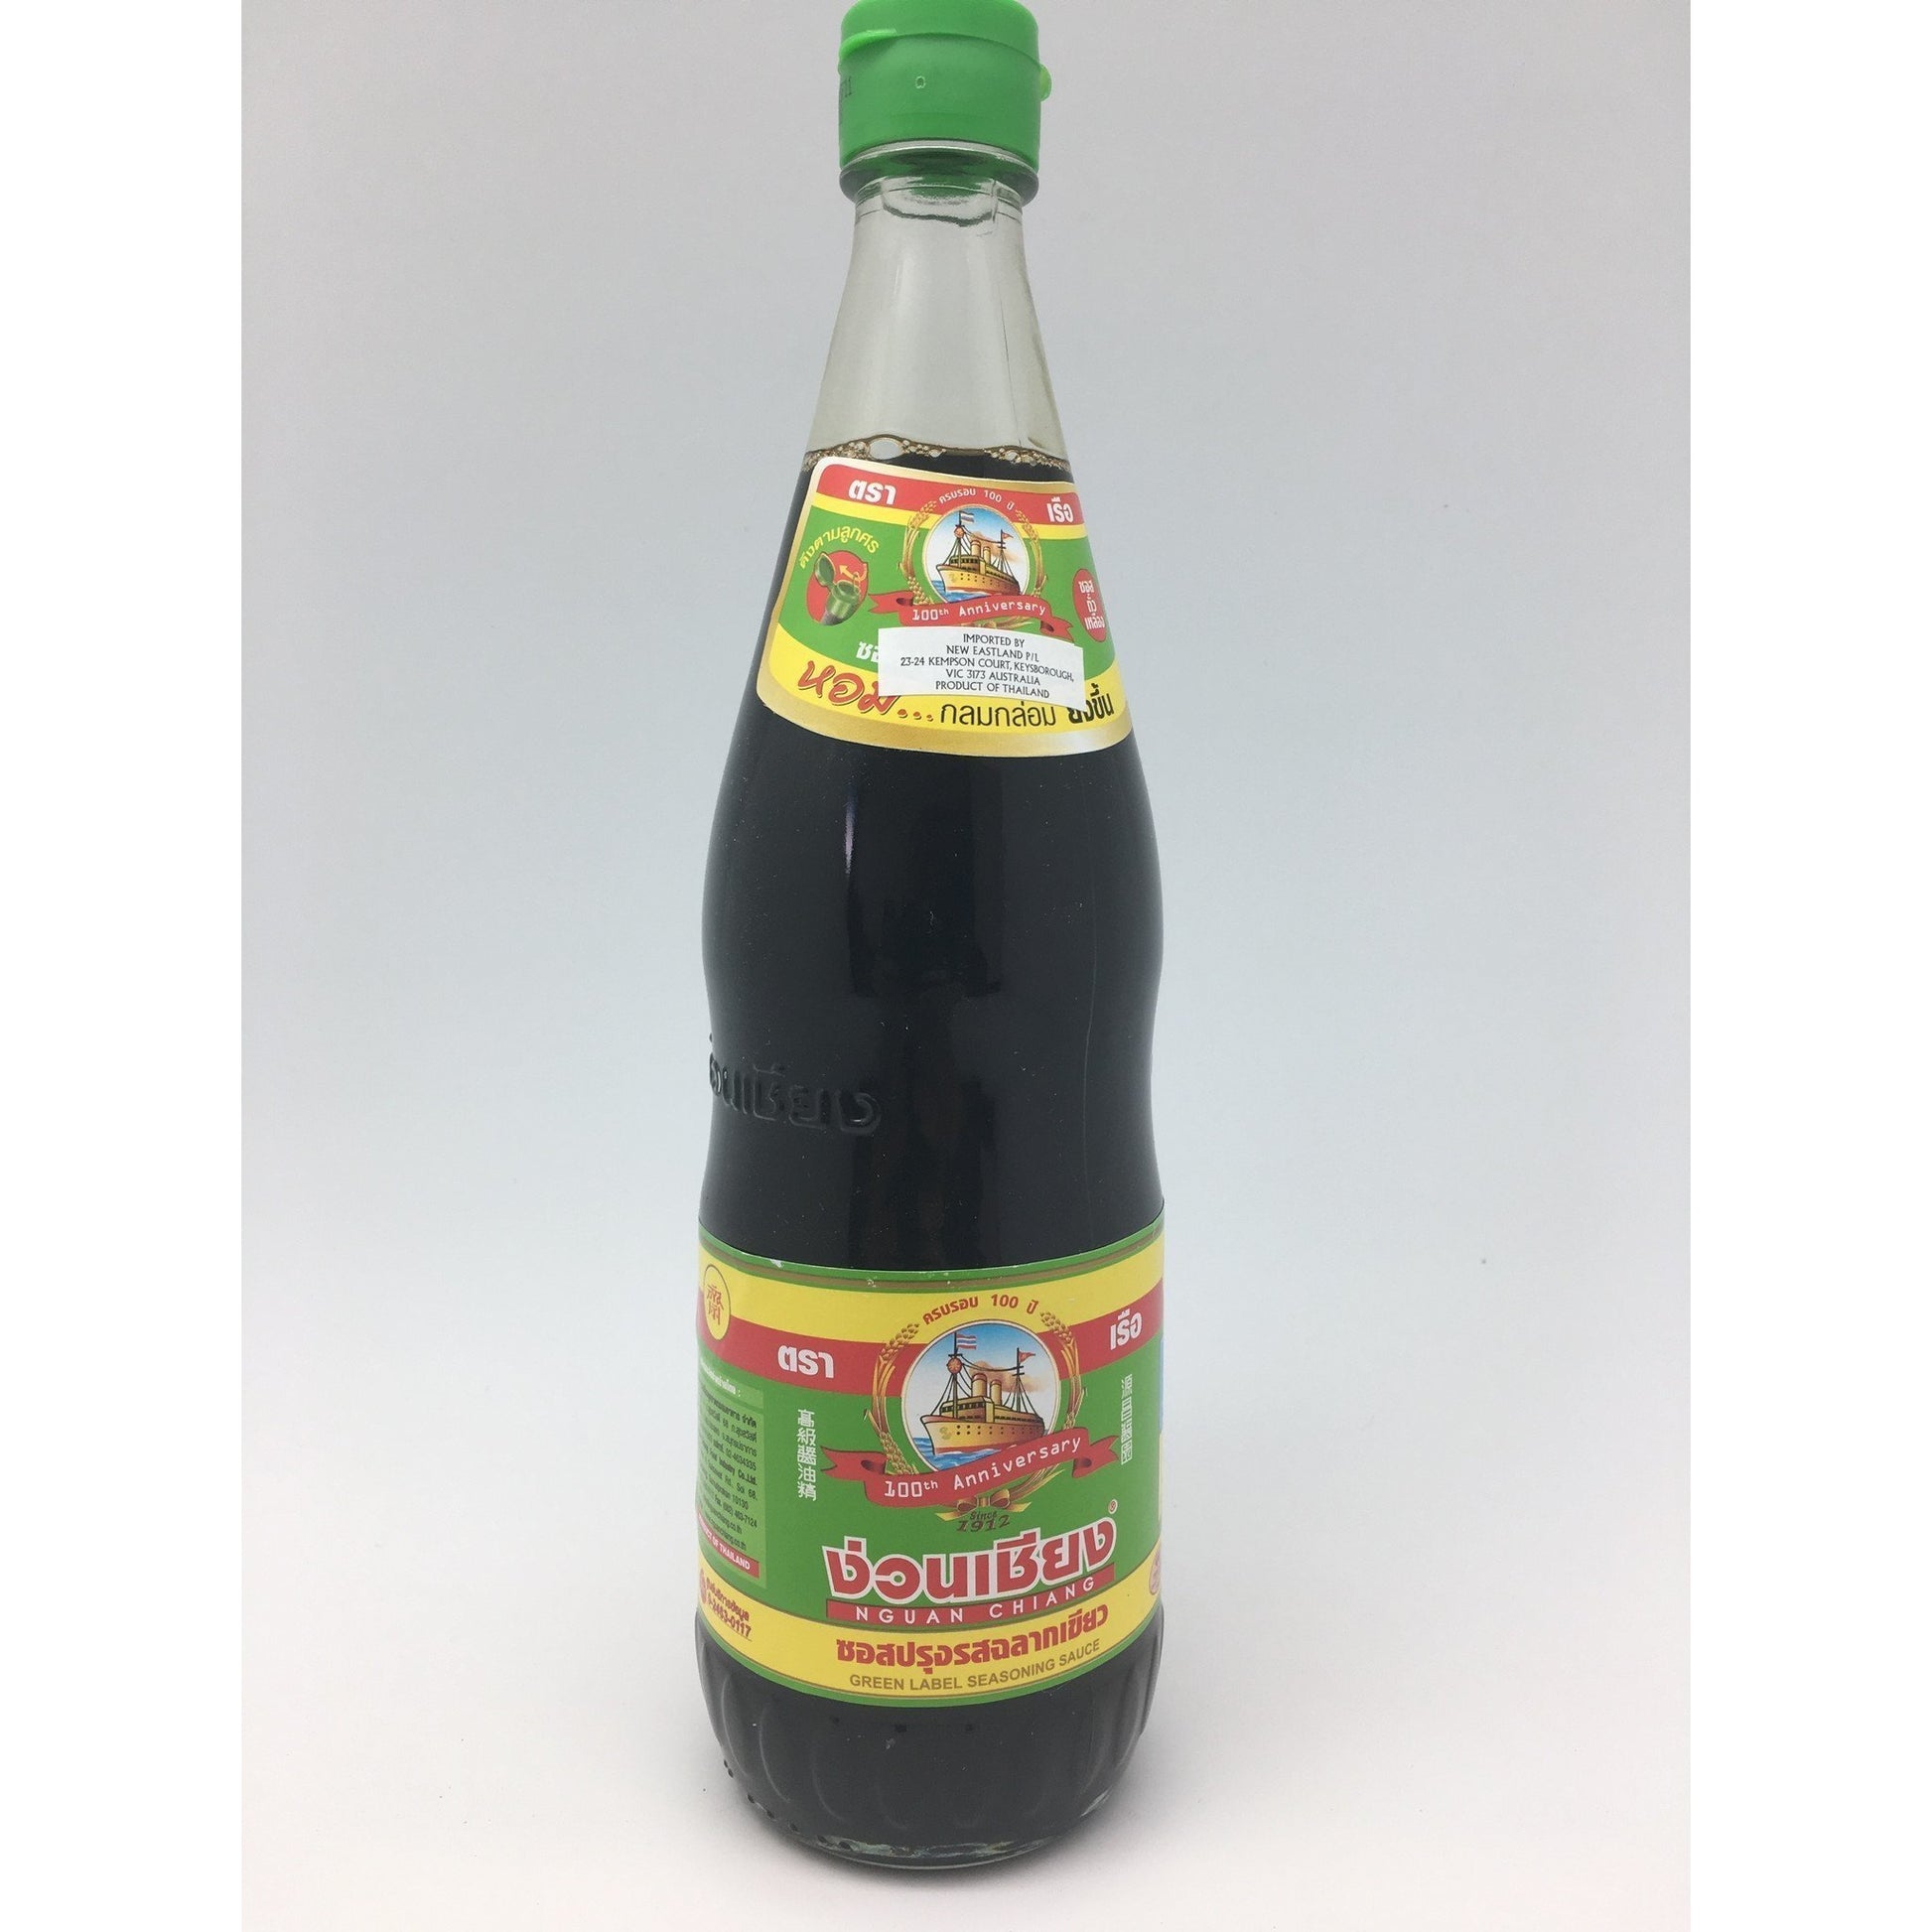 S074N Green Label Brand-Nguan Chiang seasoning sauce 700ml -  12 bot / 1ctn - New Eastland Pty Ltd - Asian food wholesalers